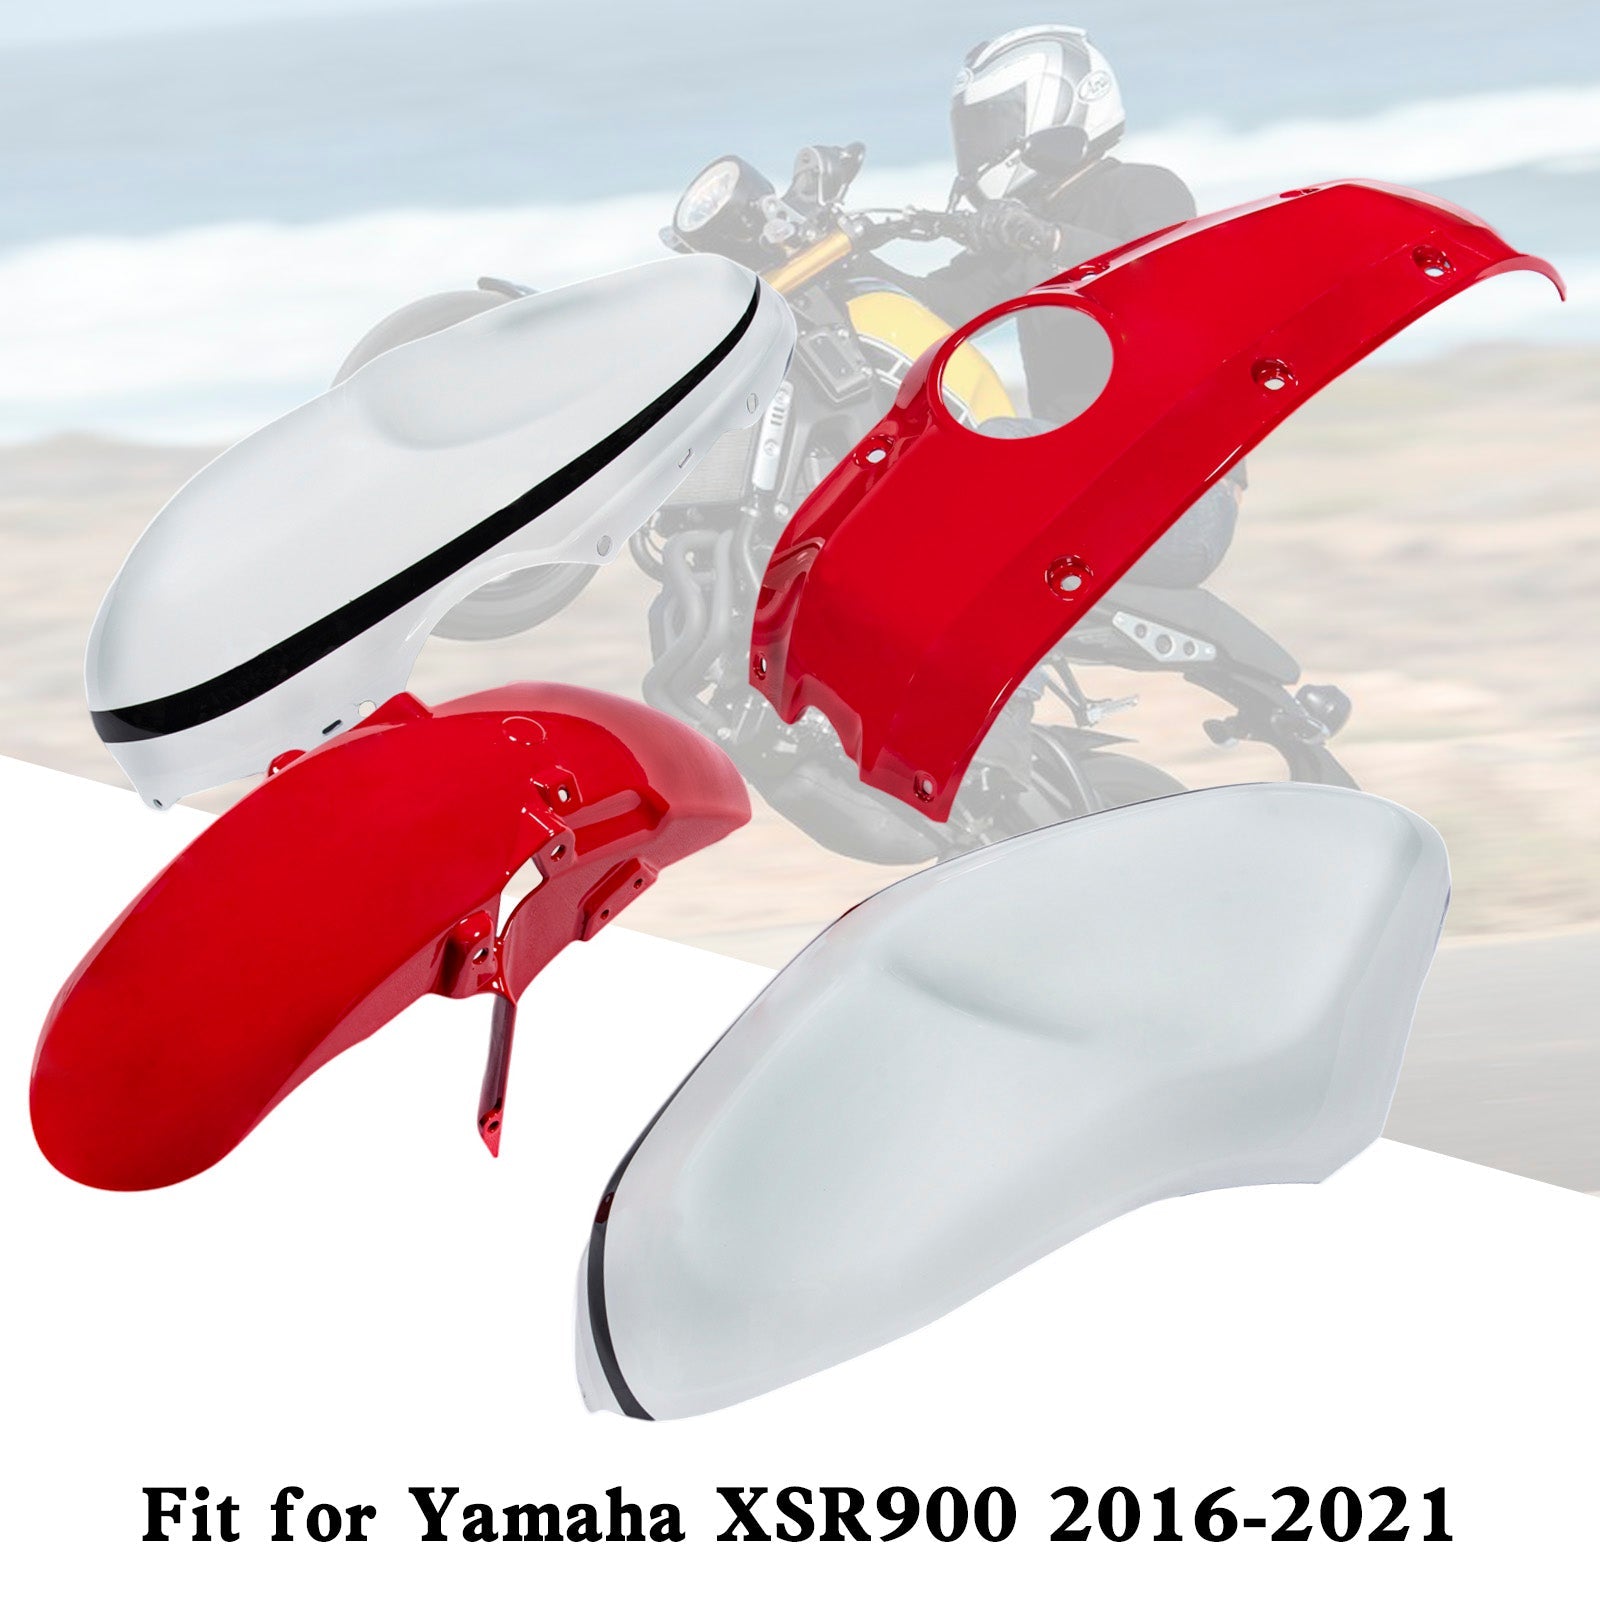 Kit carenado Yamaha XSR900 2016-2021